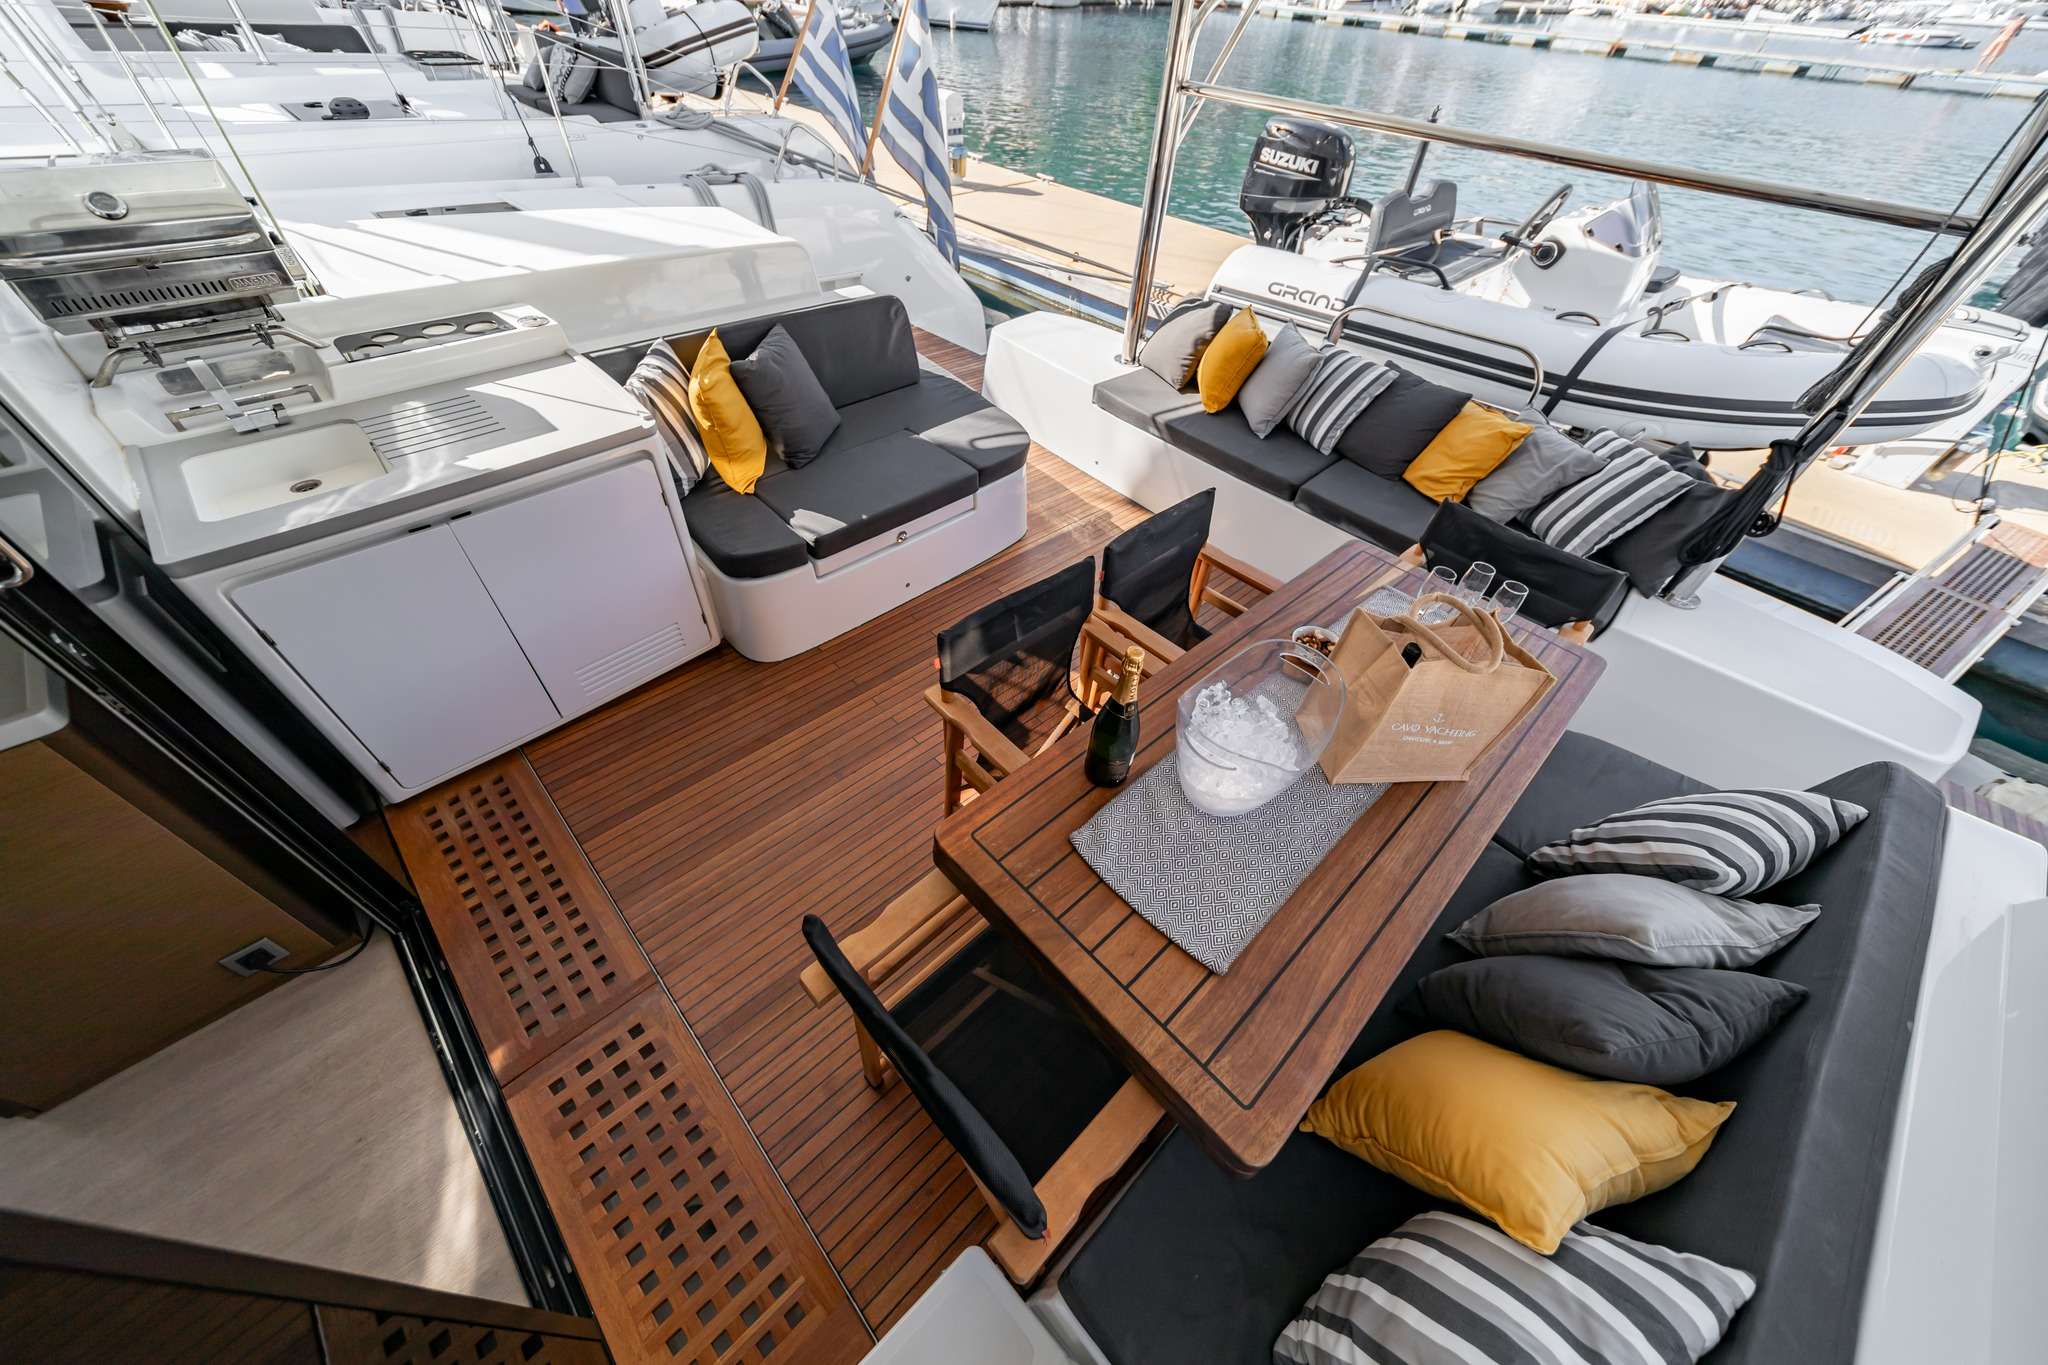 OZELO Yacht Charter - Salon Area